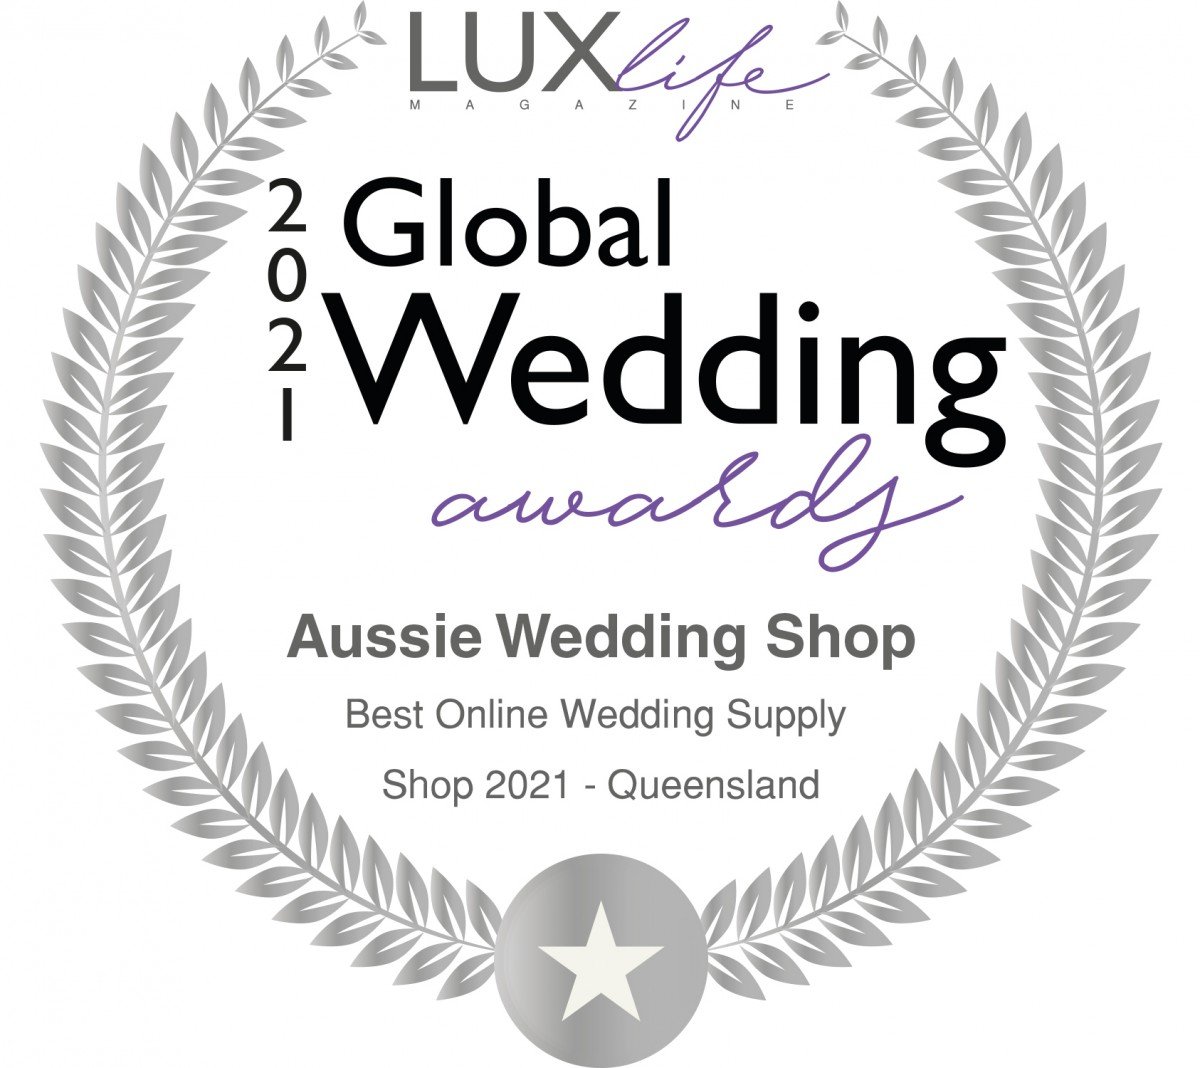 lux life 2021 global wedding award